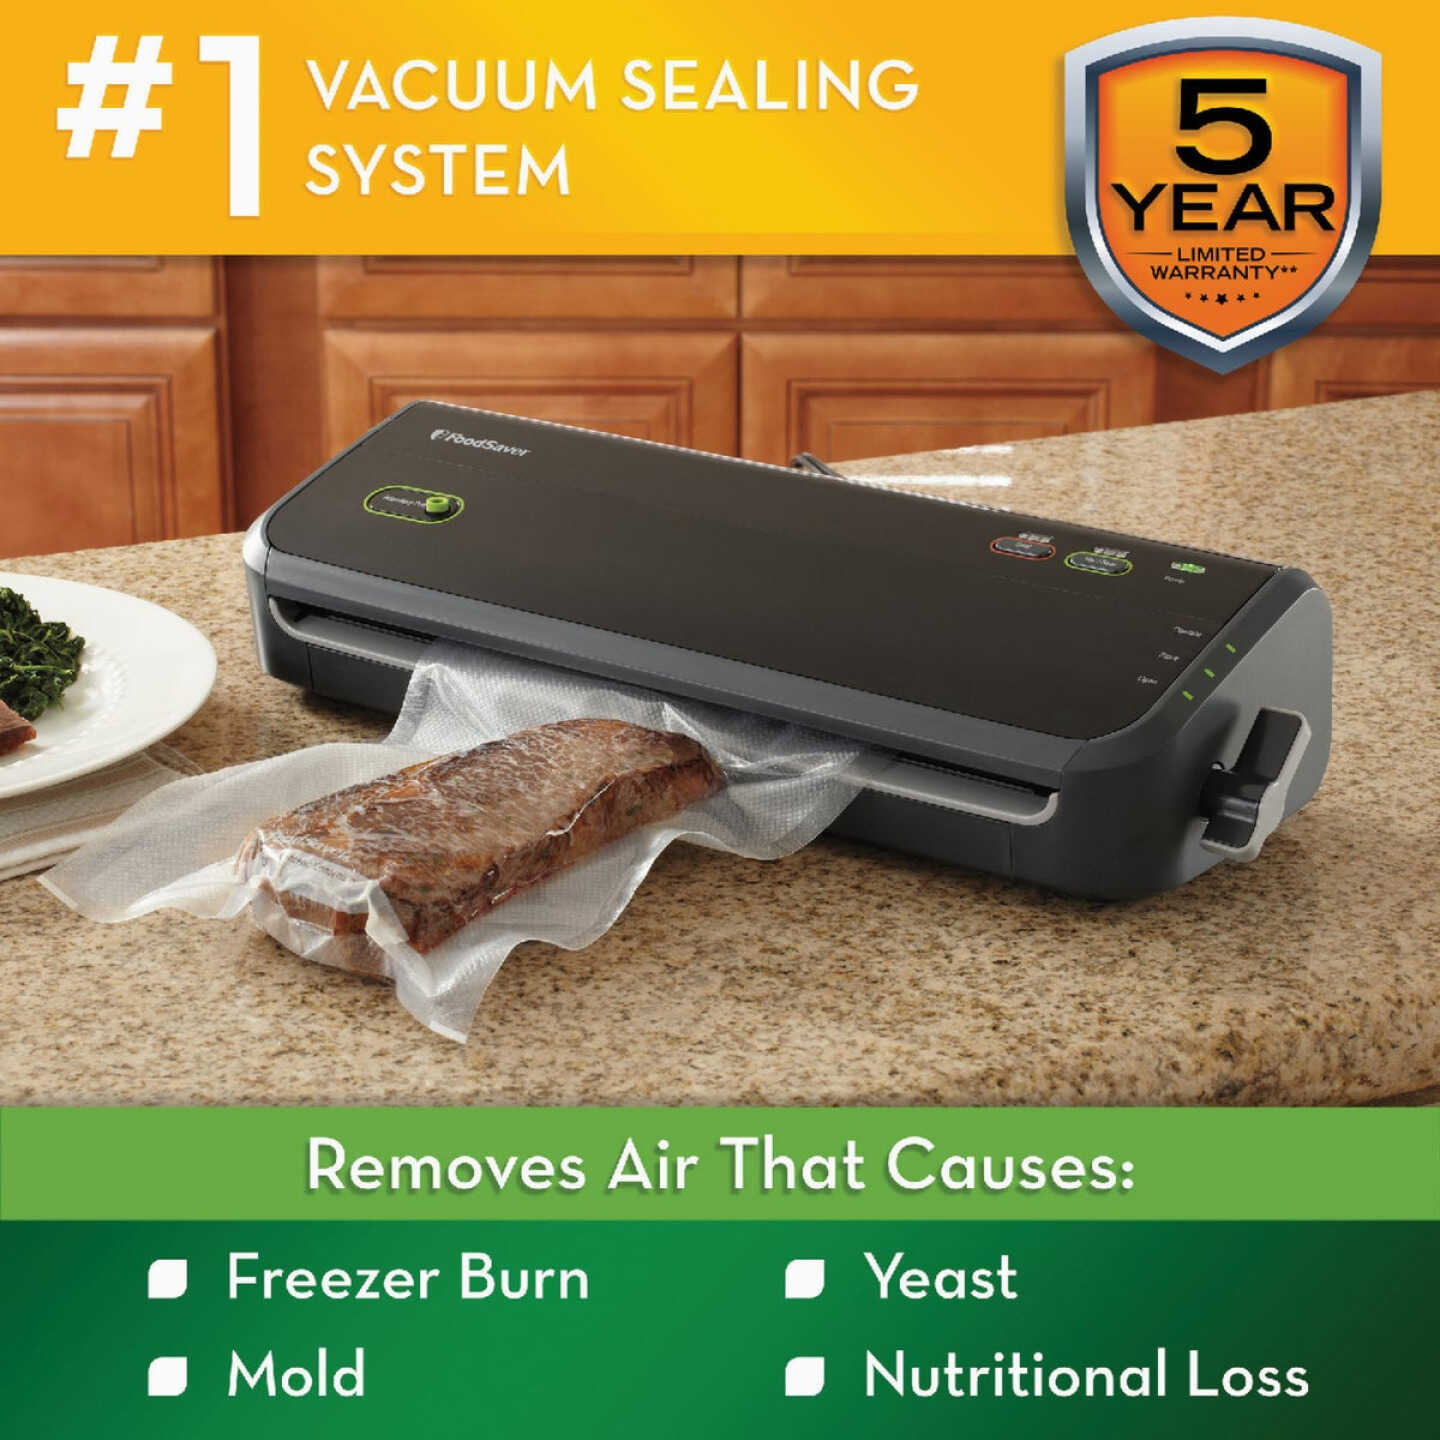 FoodSaver G2 Vacuum Food Sealer System - Farr's Hardware